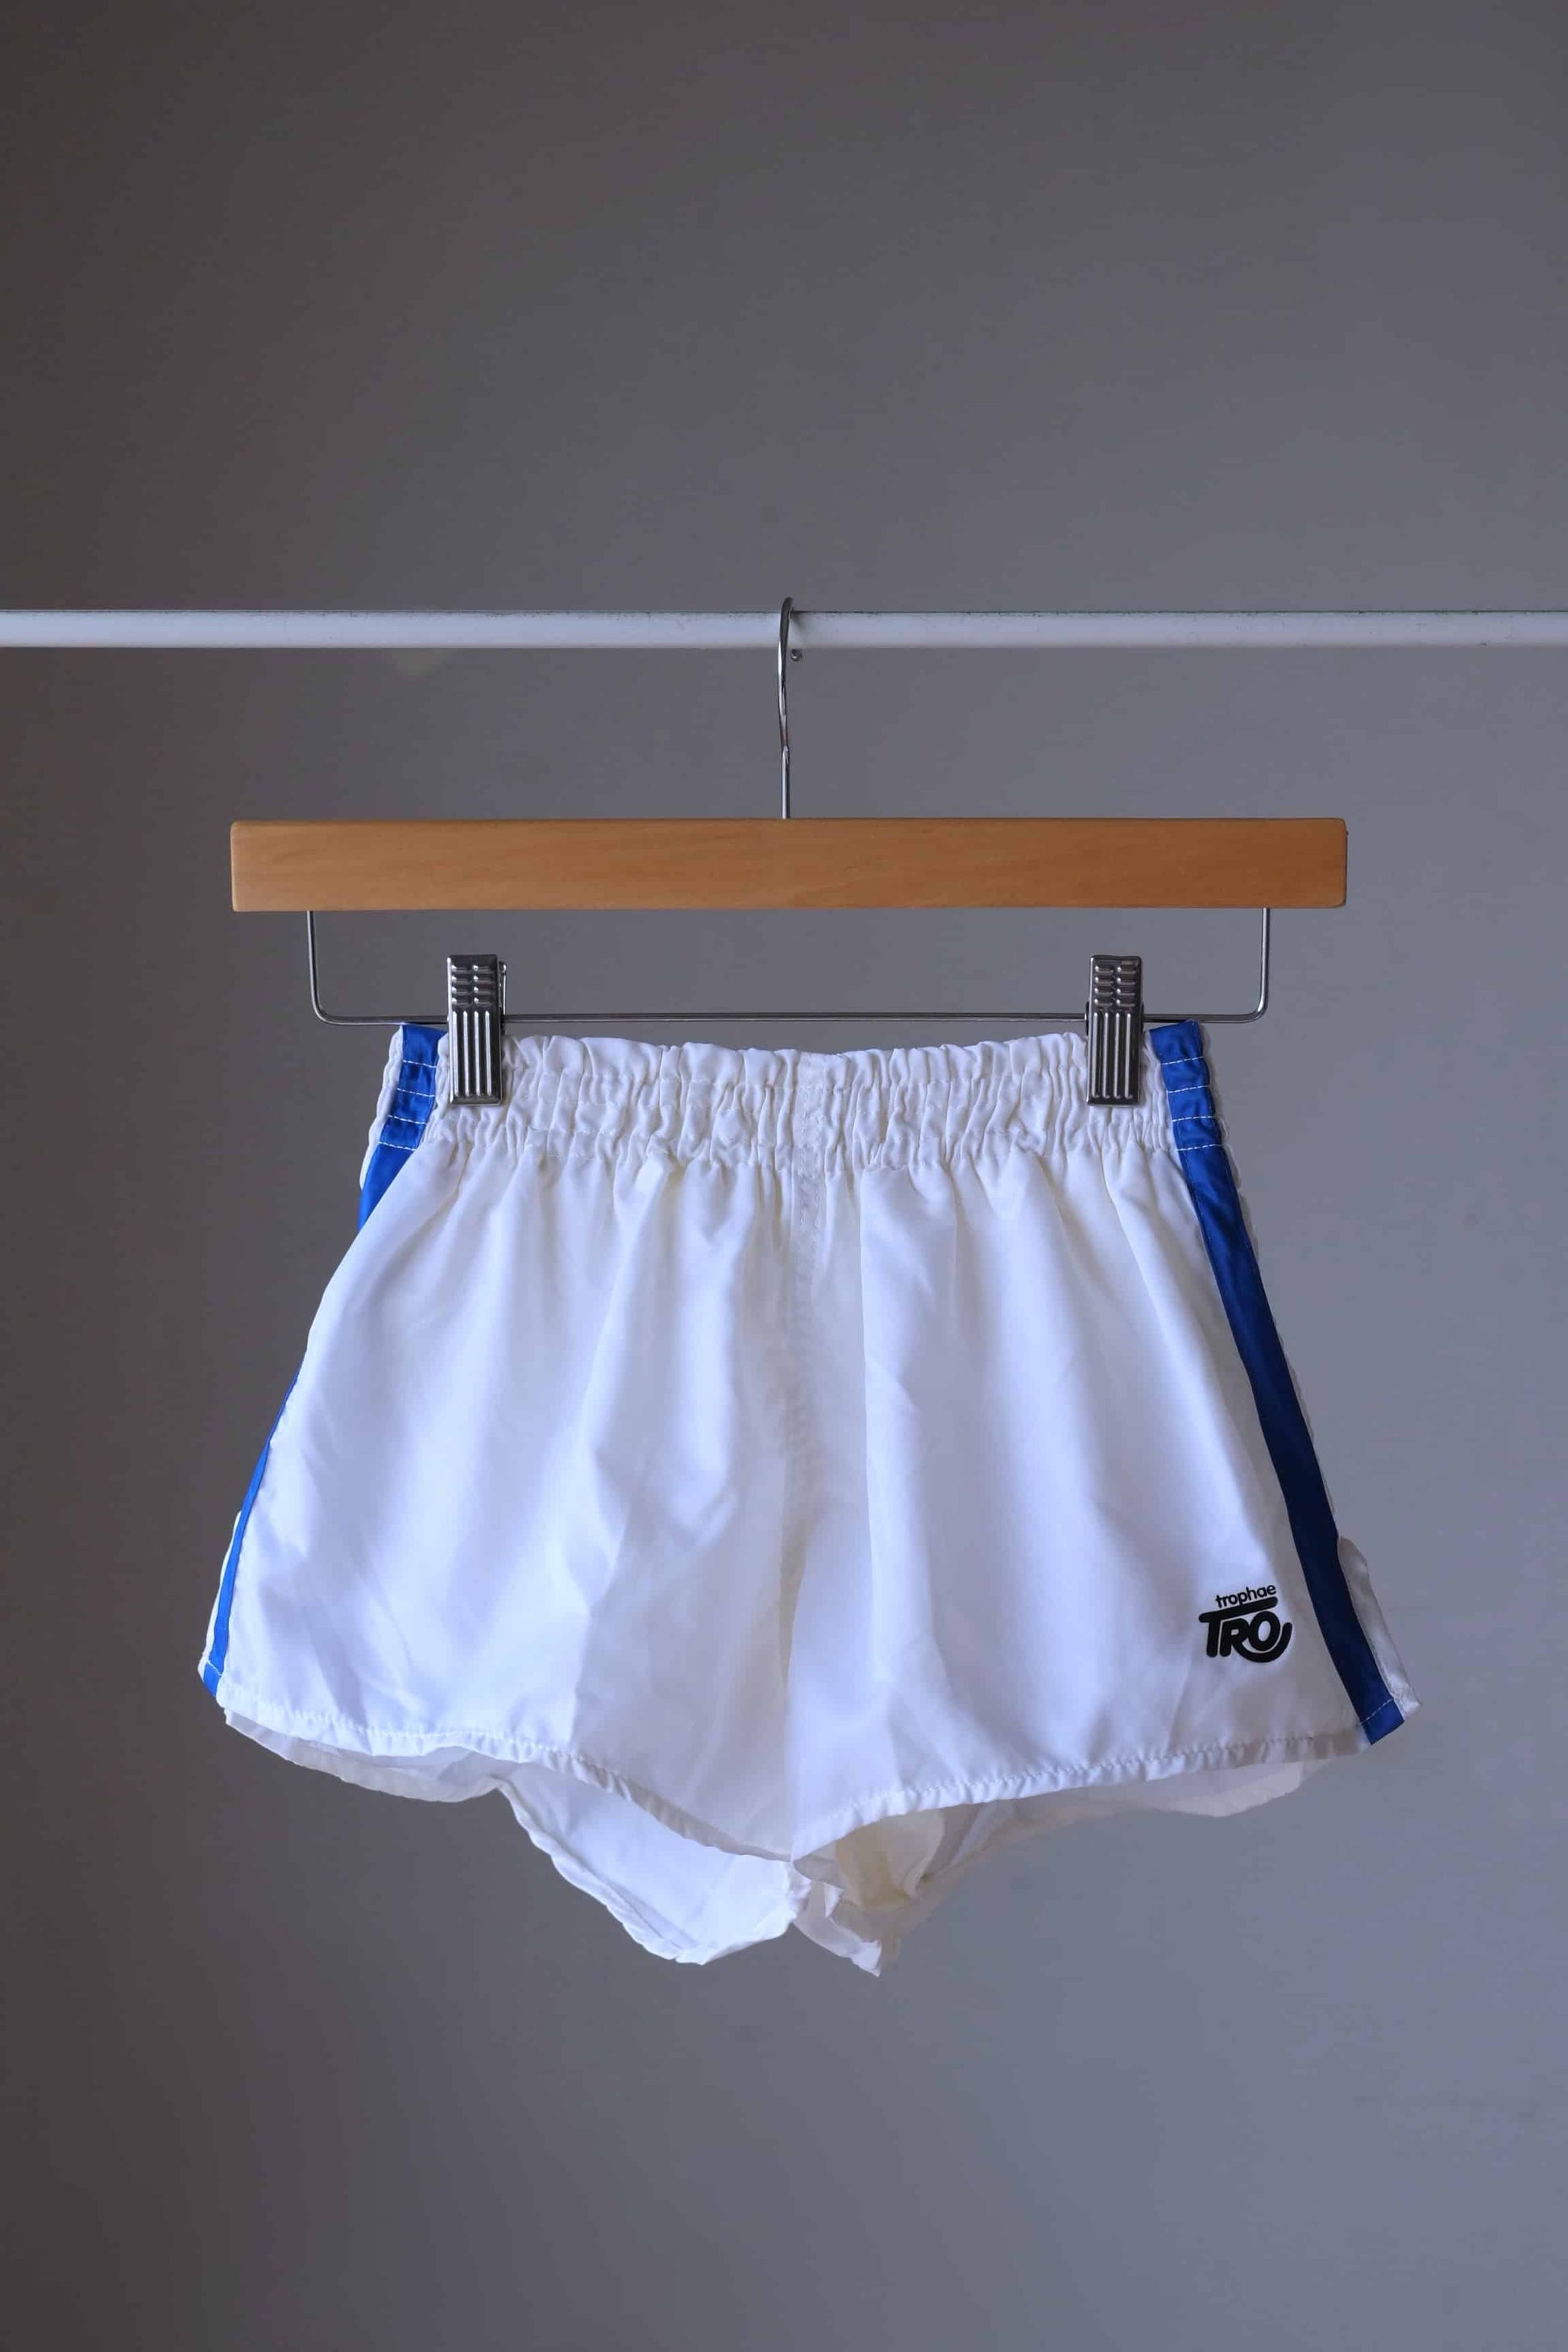 Vintage 80's Satin Jogging Shorts white blue